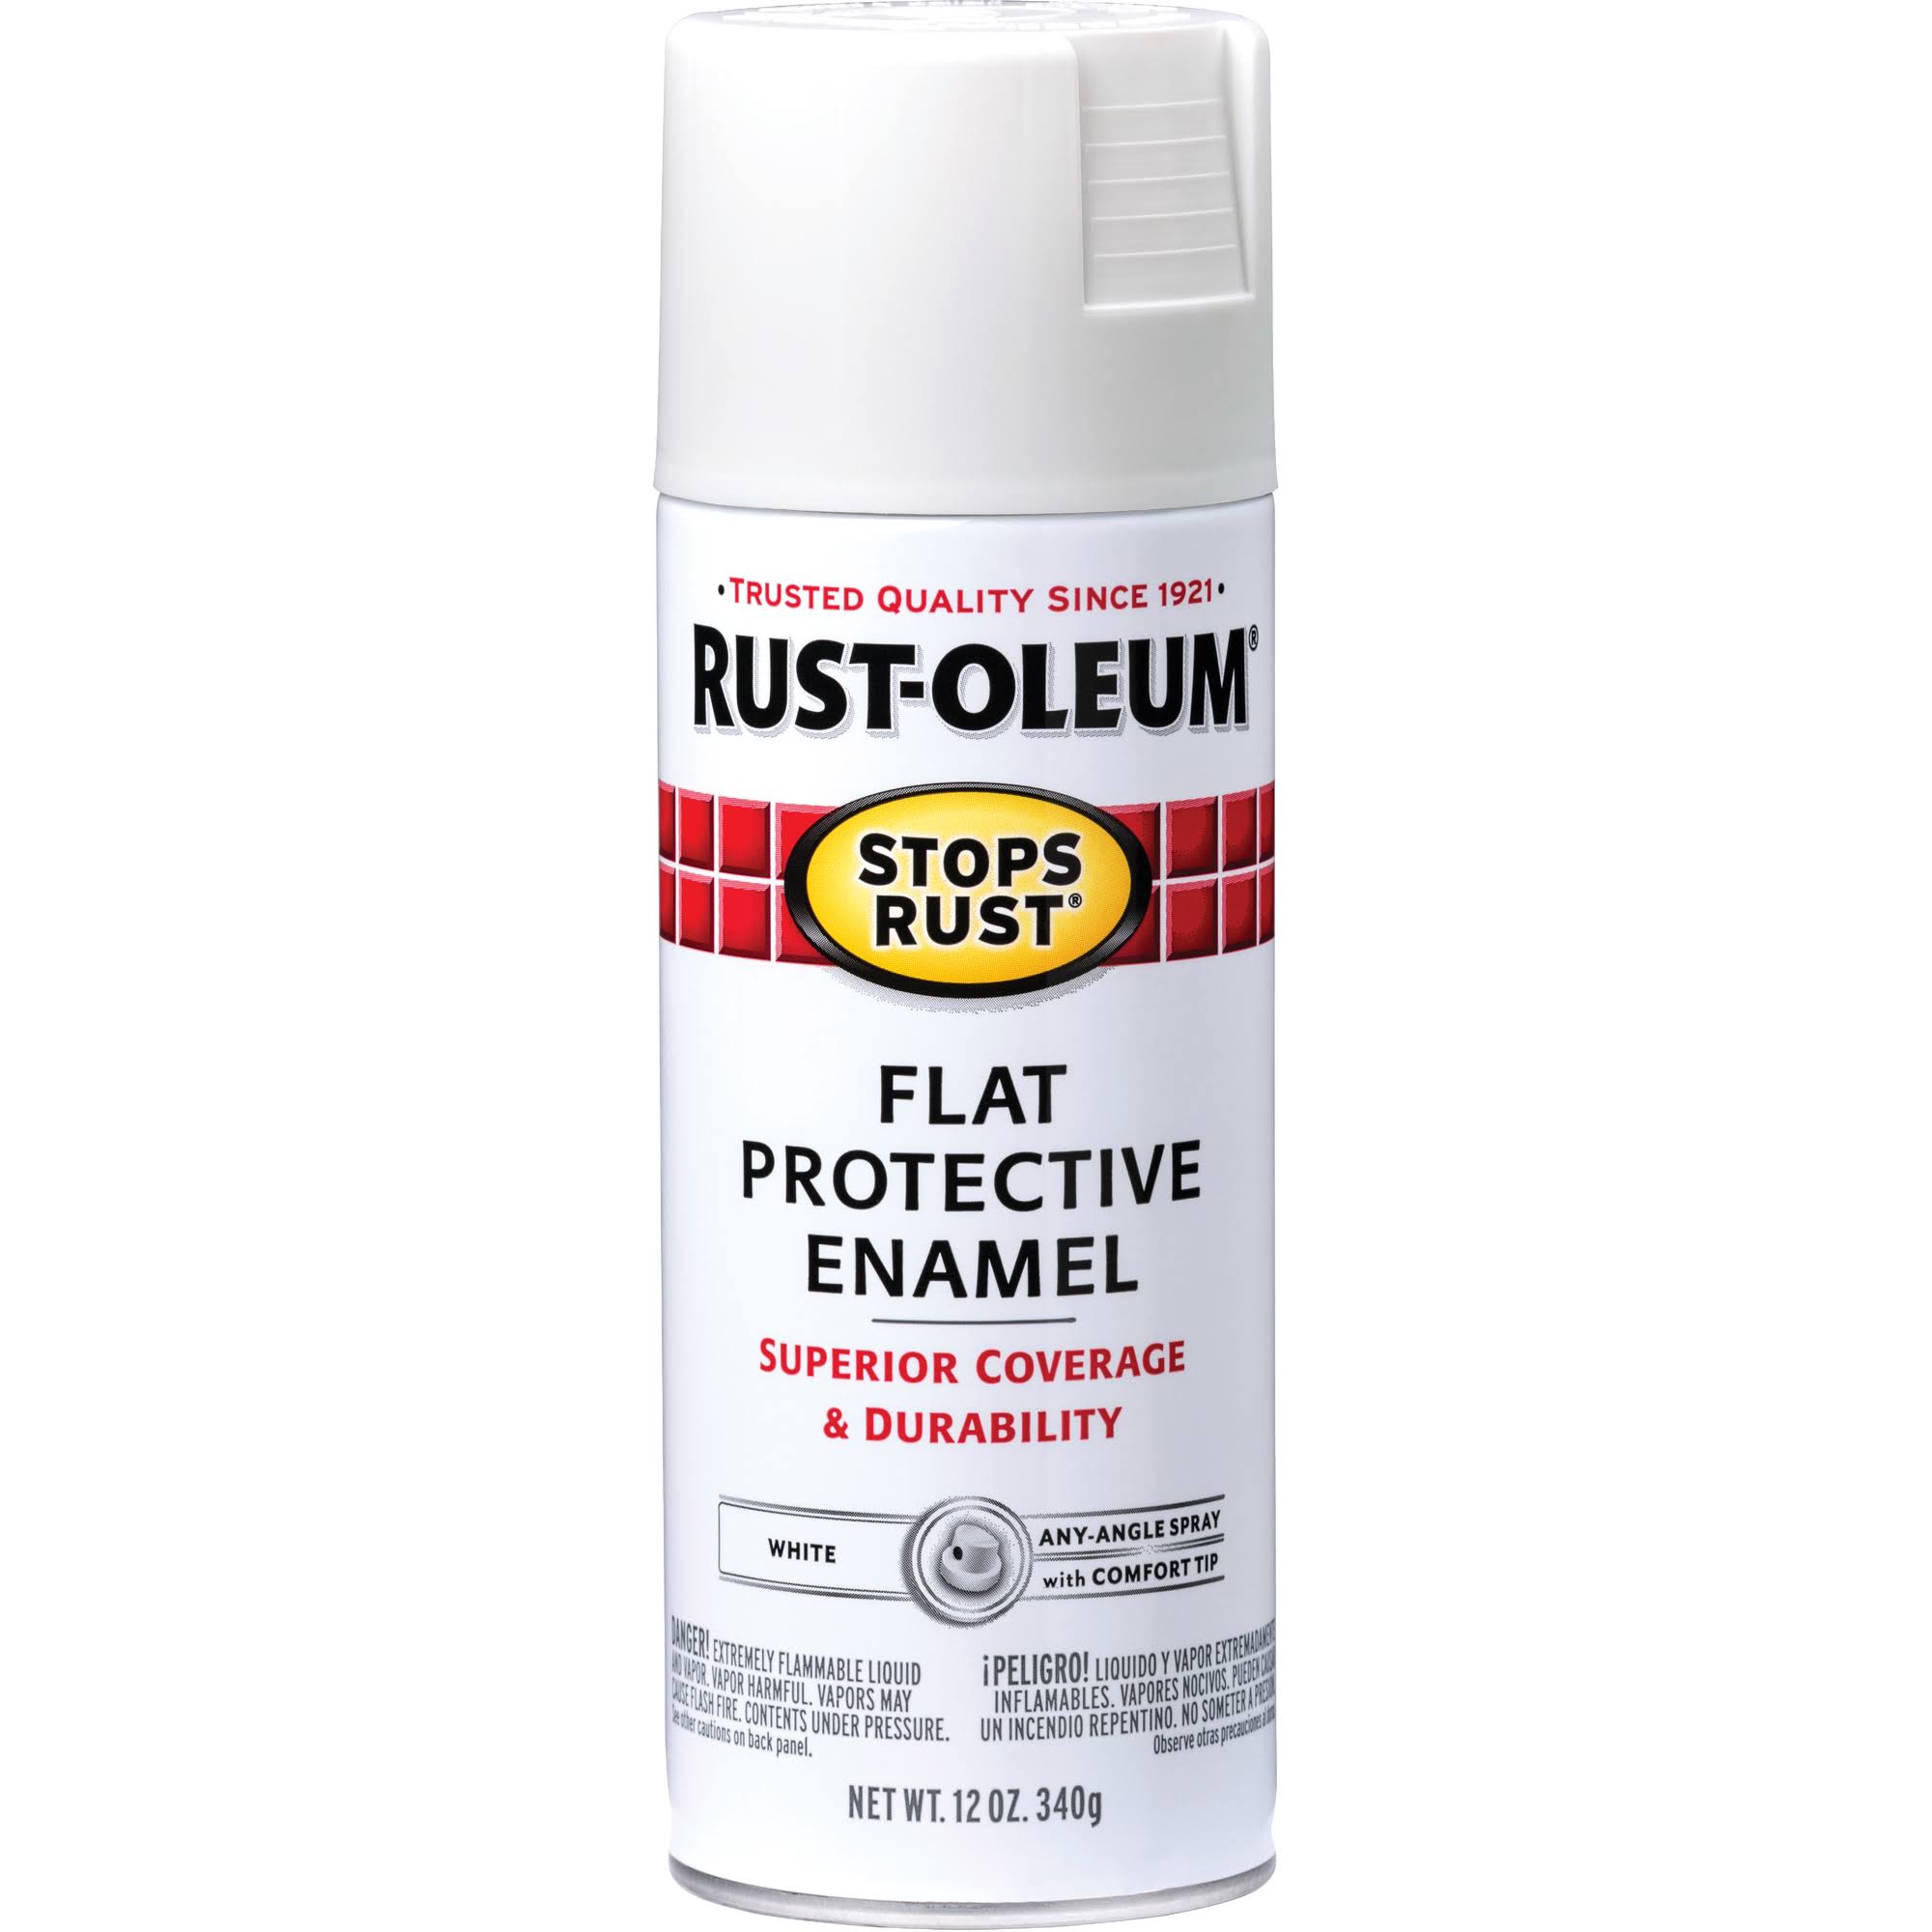 Rust-Oleum Stops Rust Flat Protective Enamel Spray - White, 12oz